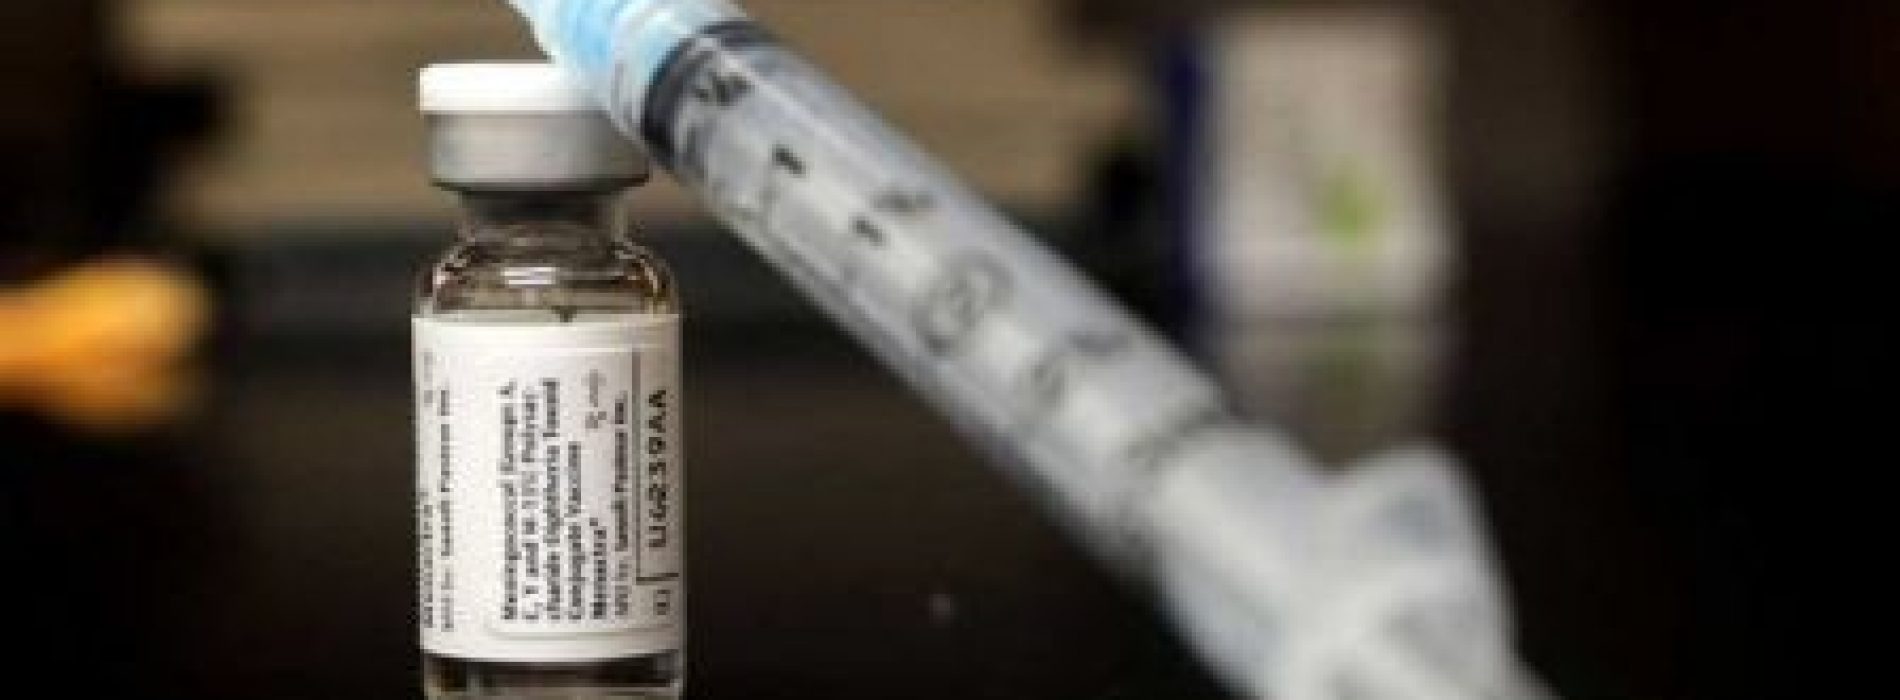 Councillor, Head of Health to account for missing meningitis vaccine in Zamfara